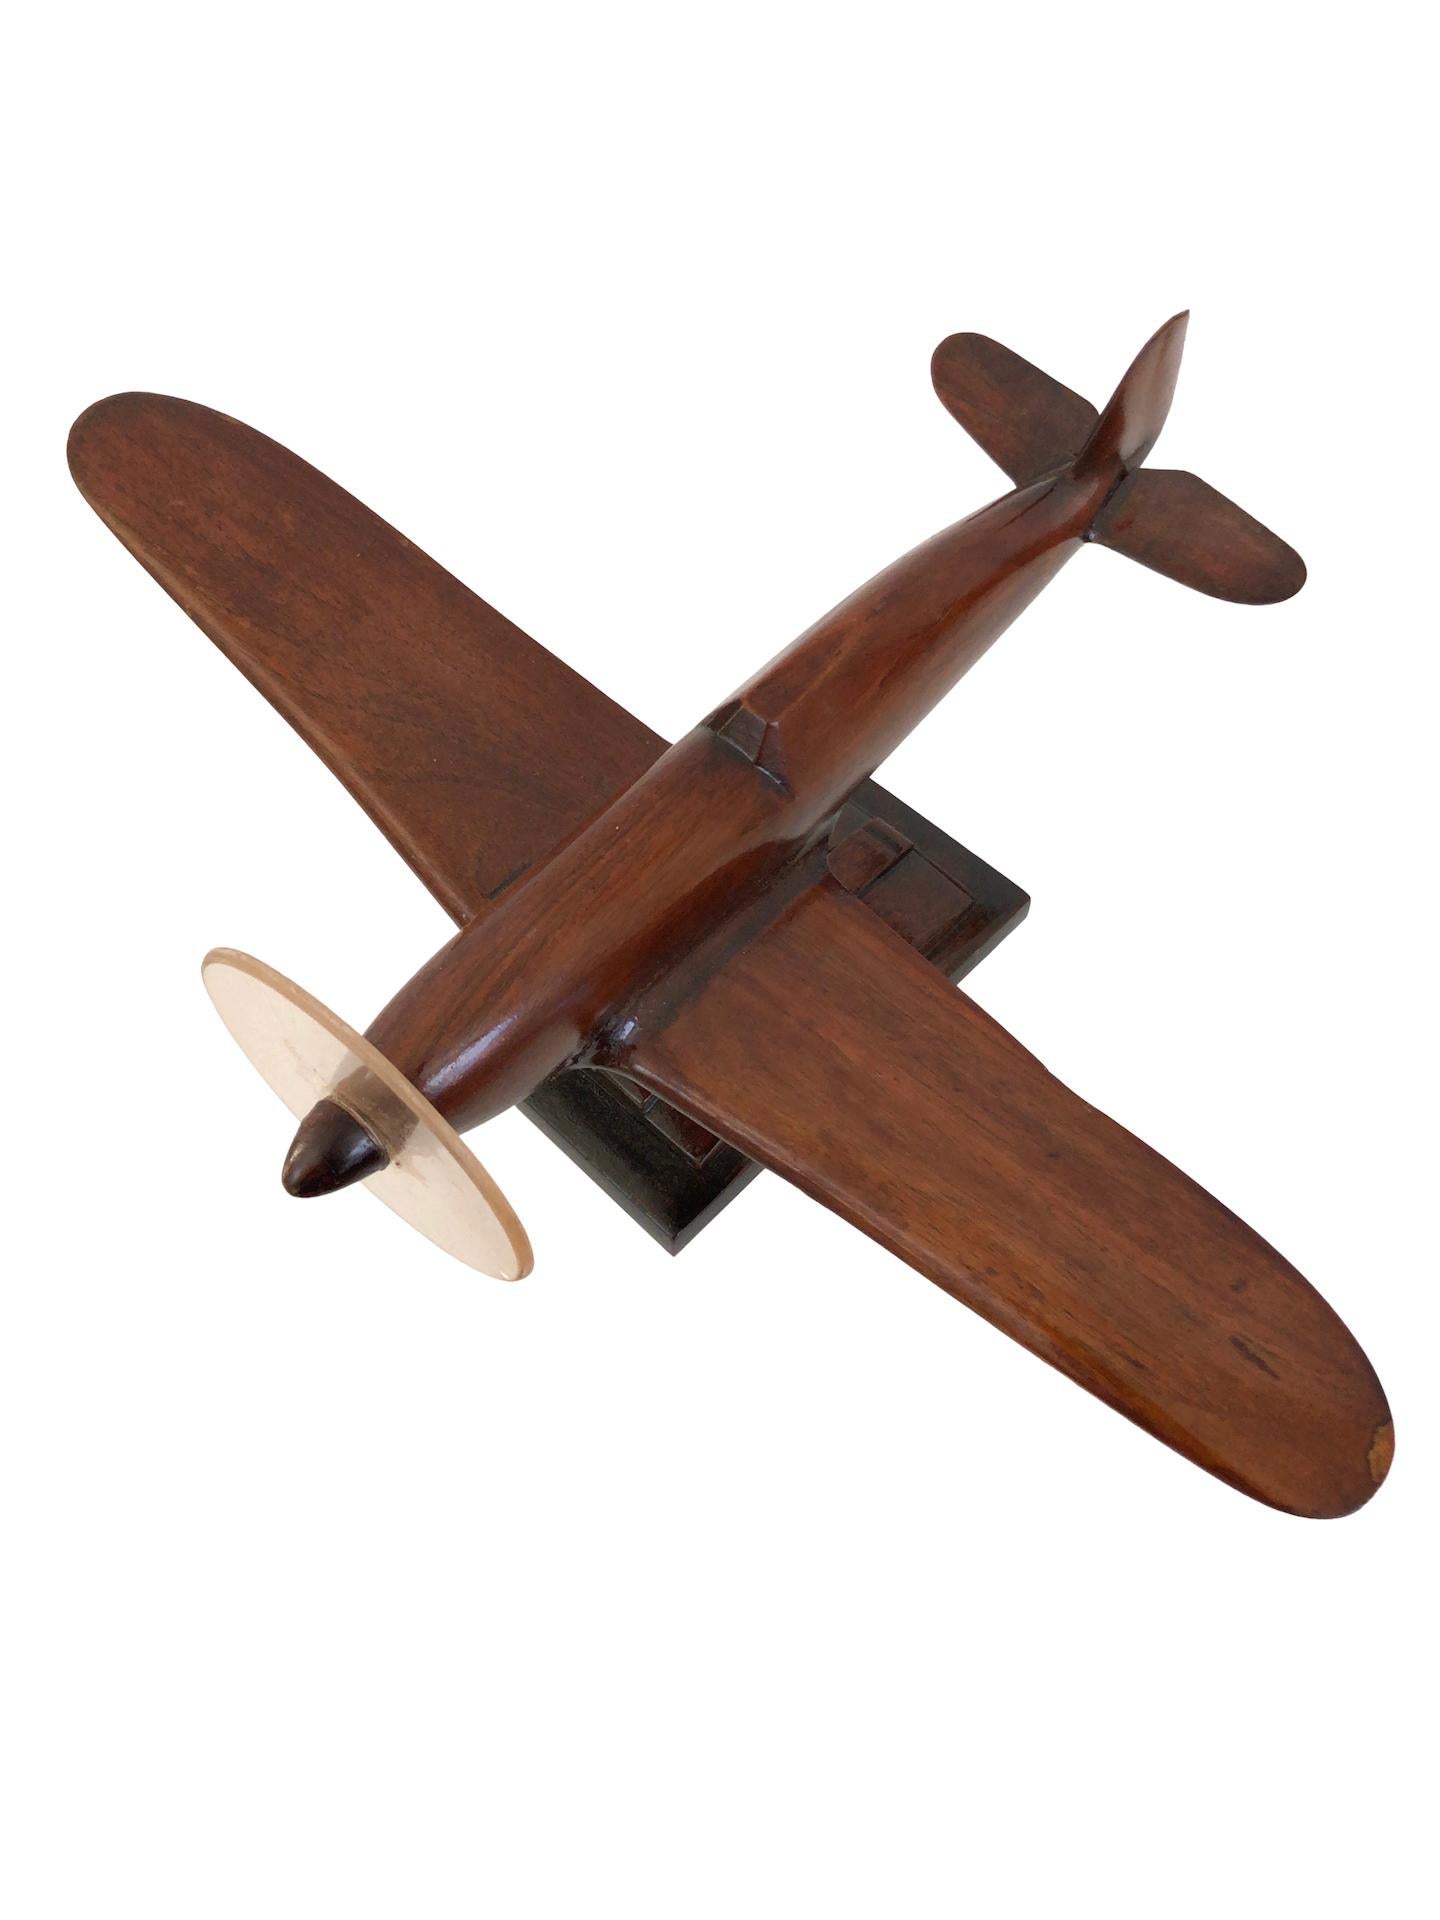 1930s French Art Deco Wooden Air Plane Desk Model  4